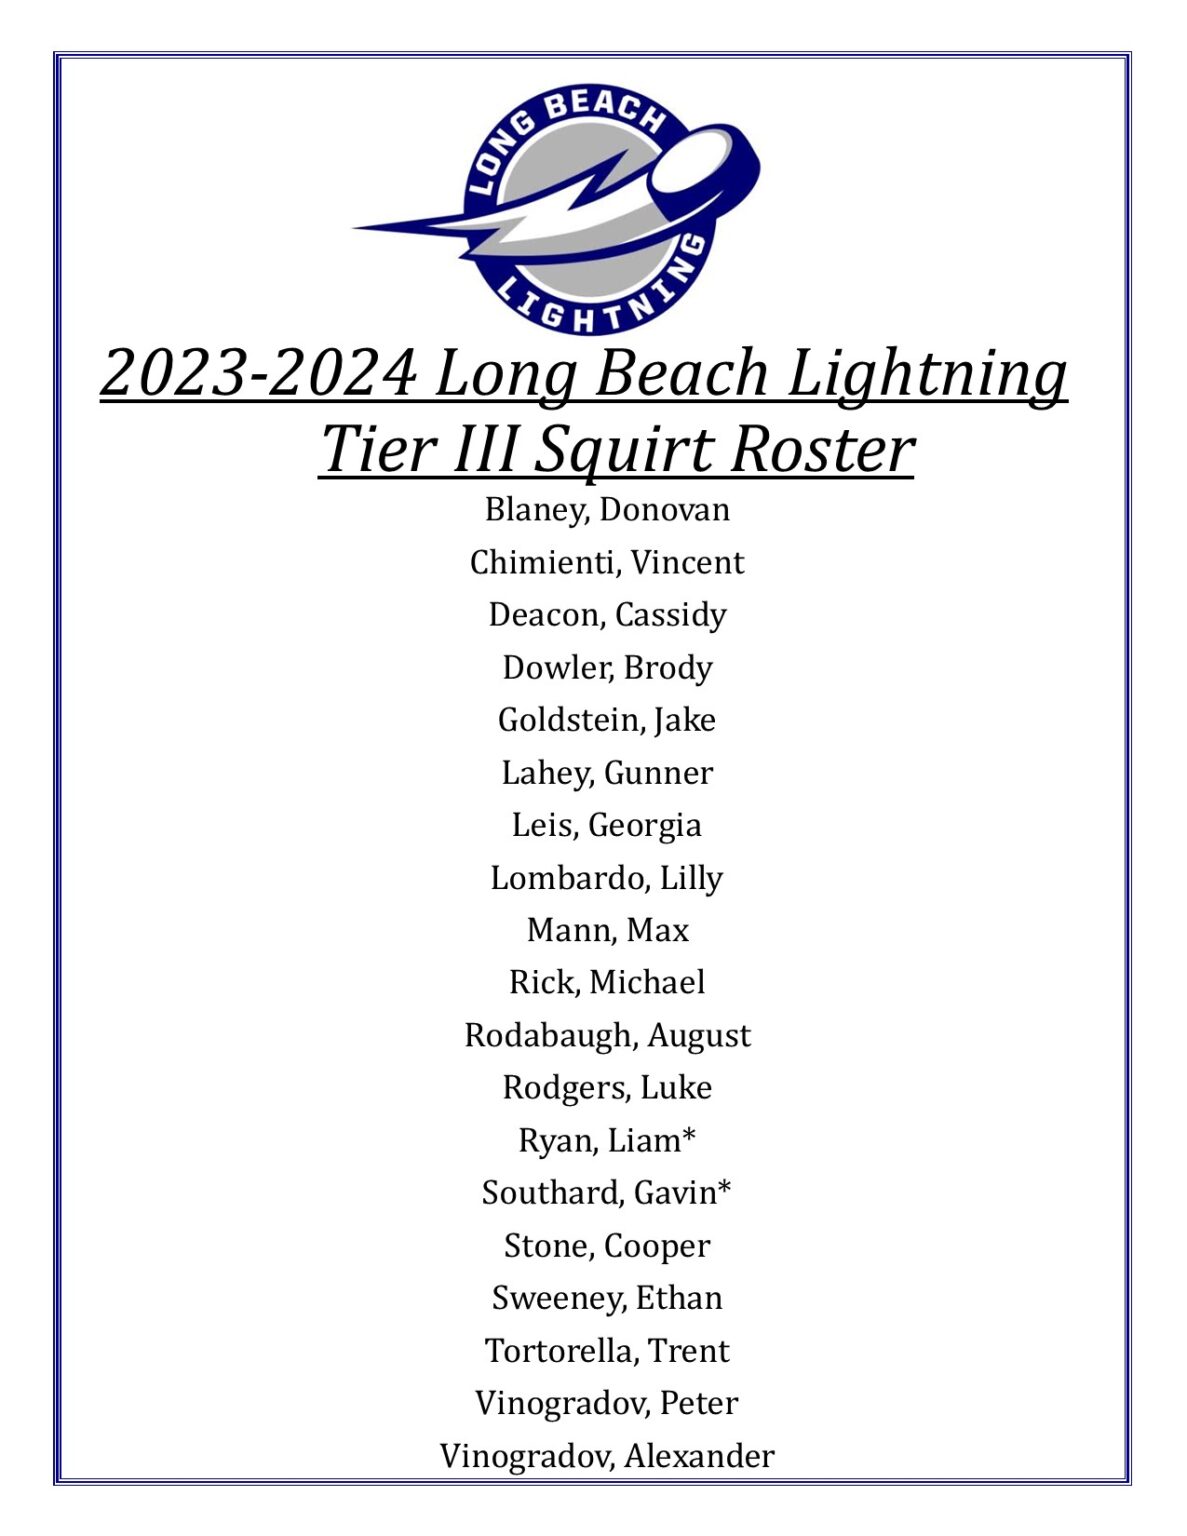 20232024 LBL SQ3 Team Long Beach Lightning